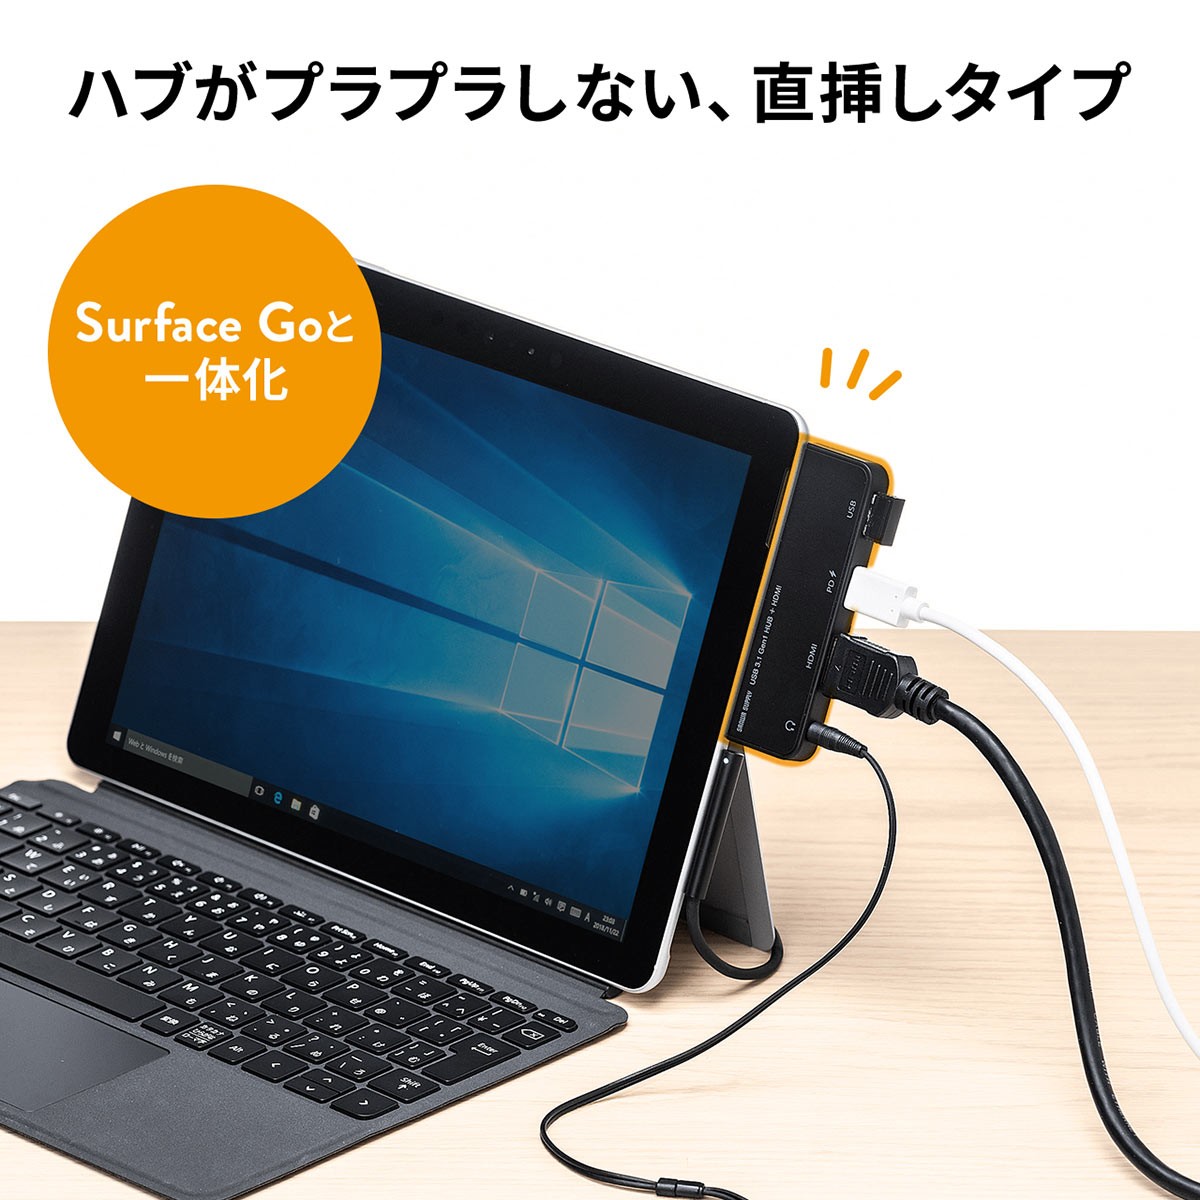 Surface Go 専用 Go3 USBハブ HDMI 増設 USB3.1 Gen1 USB3.0 ハブ サーフェス ゴー専用 Type-C  USB-A 3.5mm 4極ミニジャック バスパワー 400-HUB073BK :400-HUB073BK:サンワダイレクト 通販  